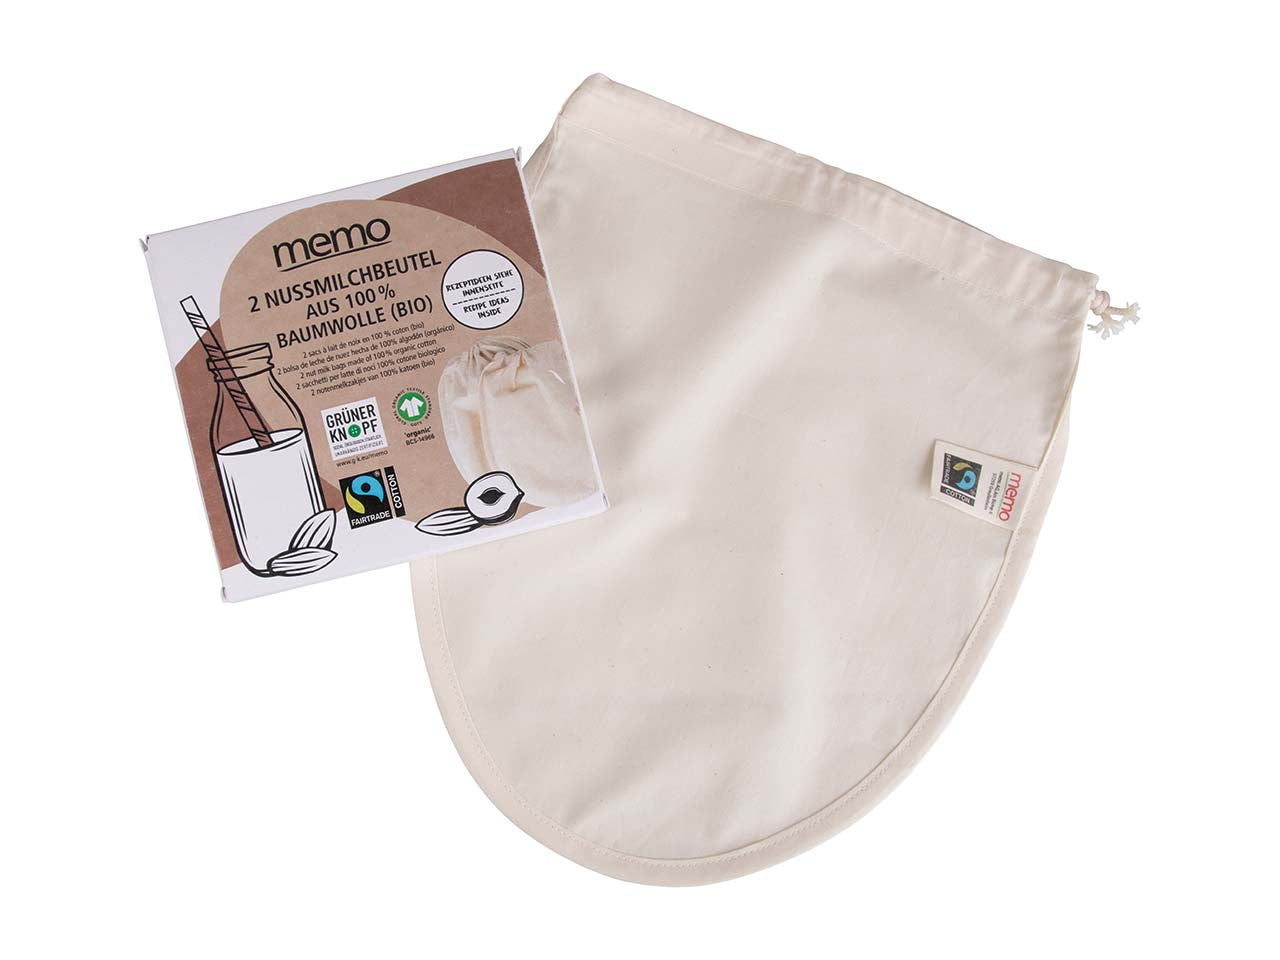 Memo Organic Nut Milk Cotton Bag 2 Pack